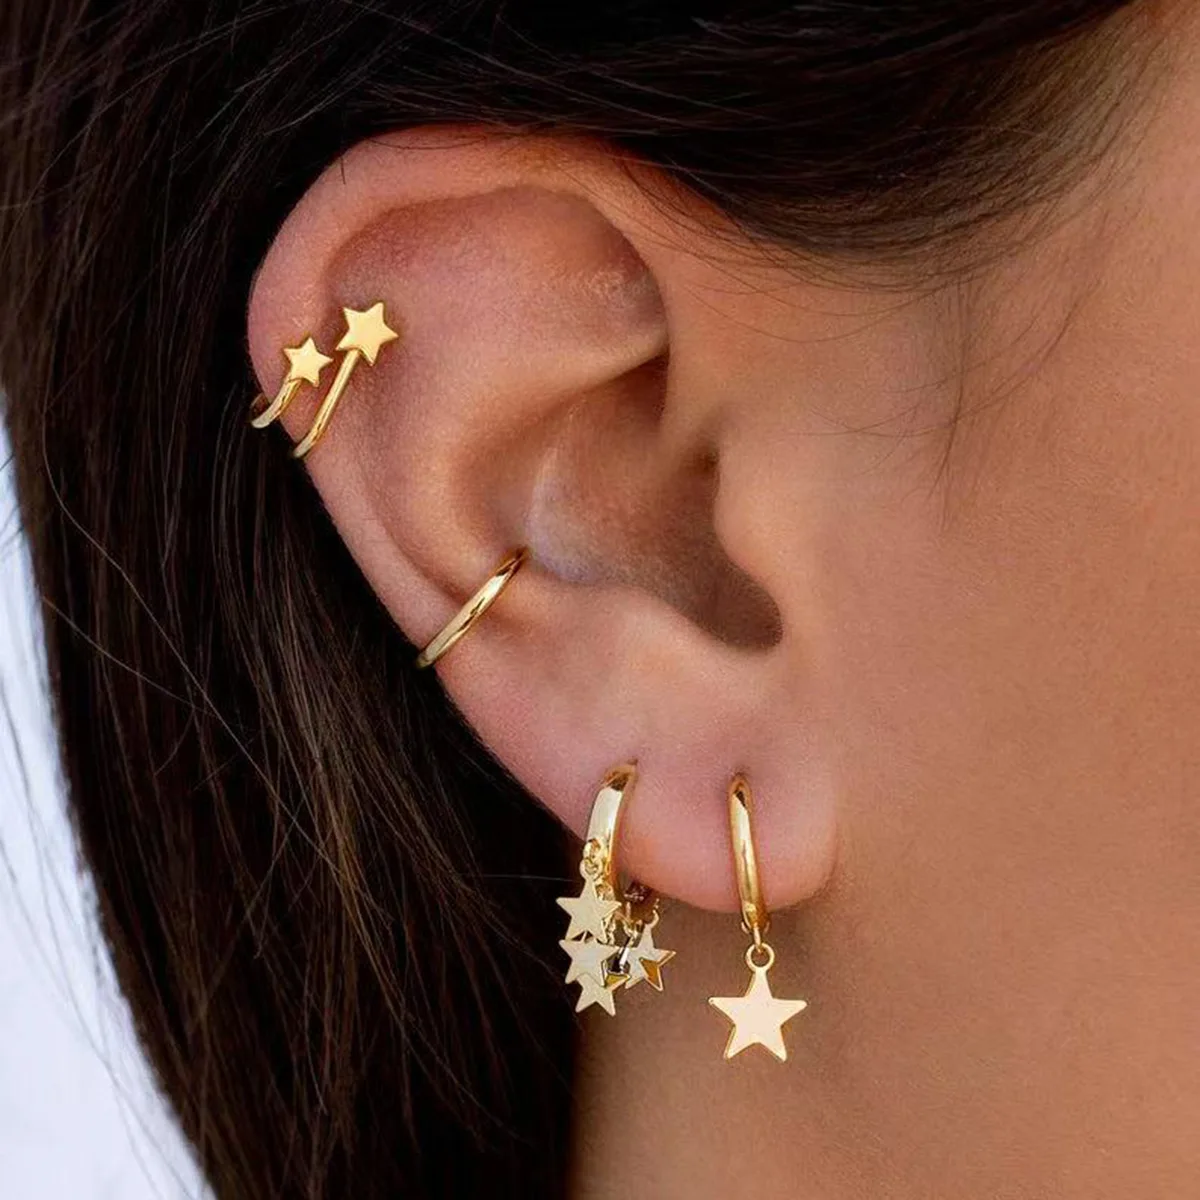 

Korea Fashion Gold Star Earrings Set For Women Simple Small Hoop Gold Huggies Earring Jewelry, Like picture